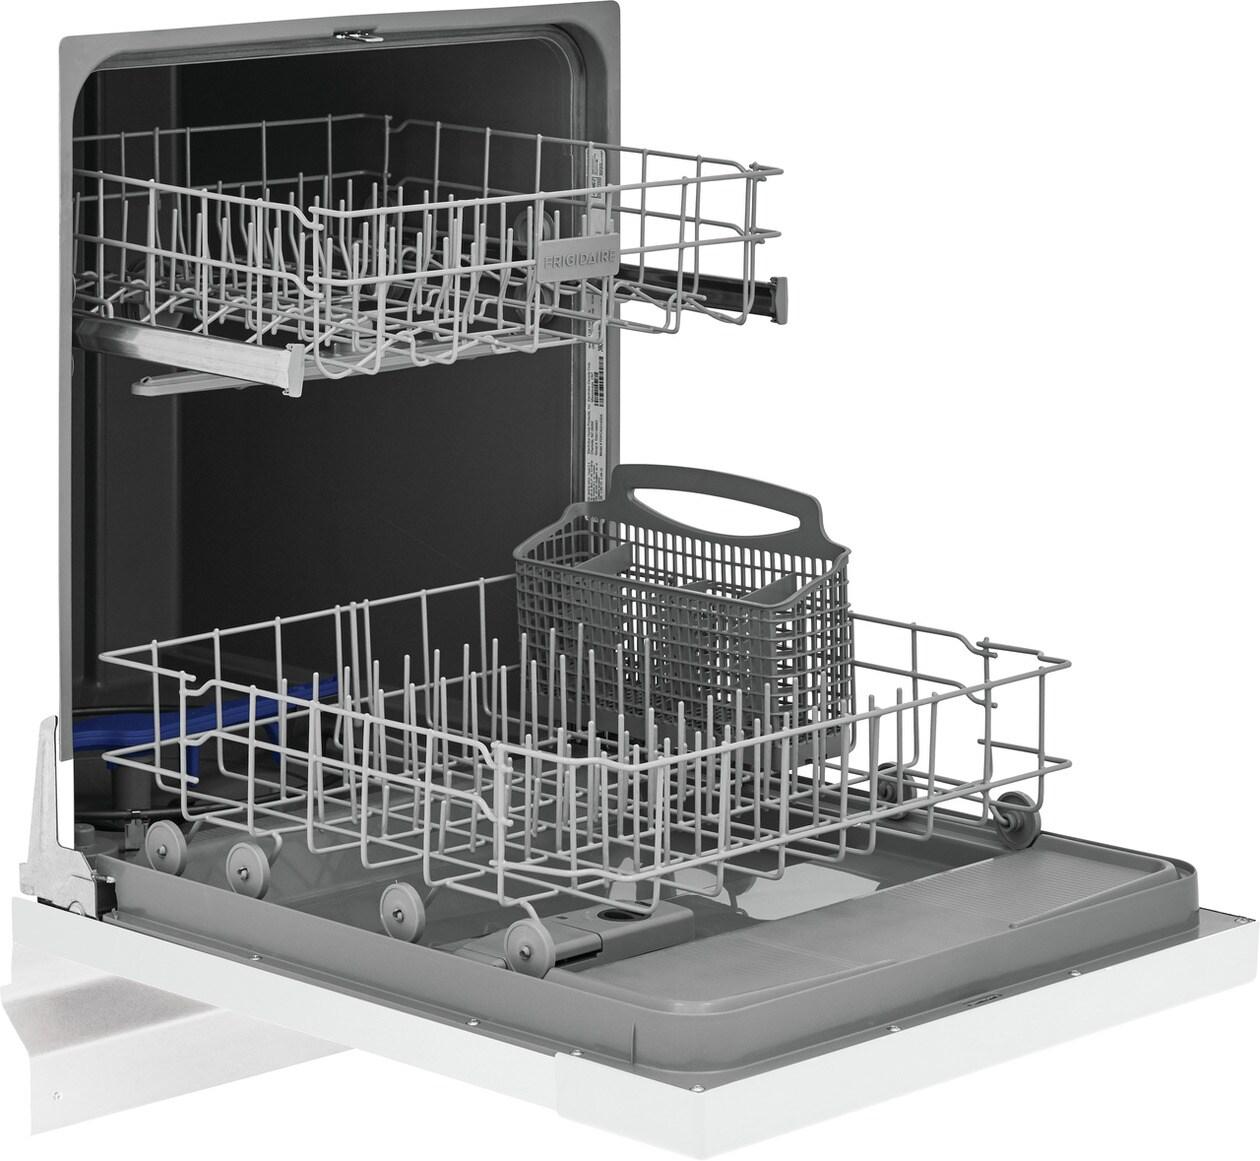 Frigidaire 24" Built-In Dishwasher